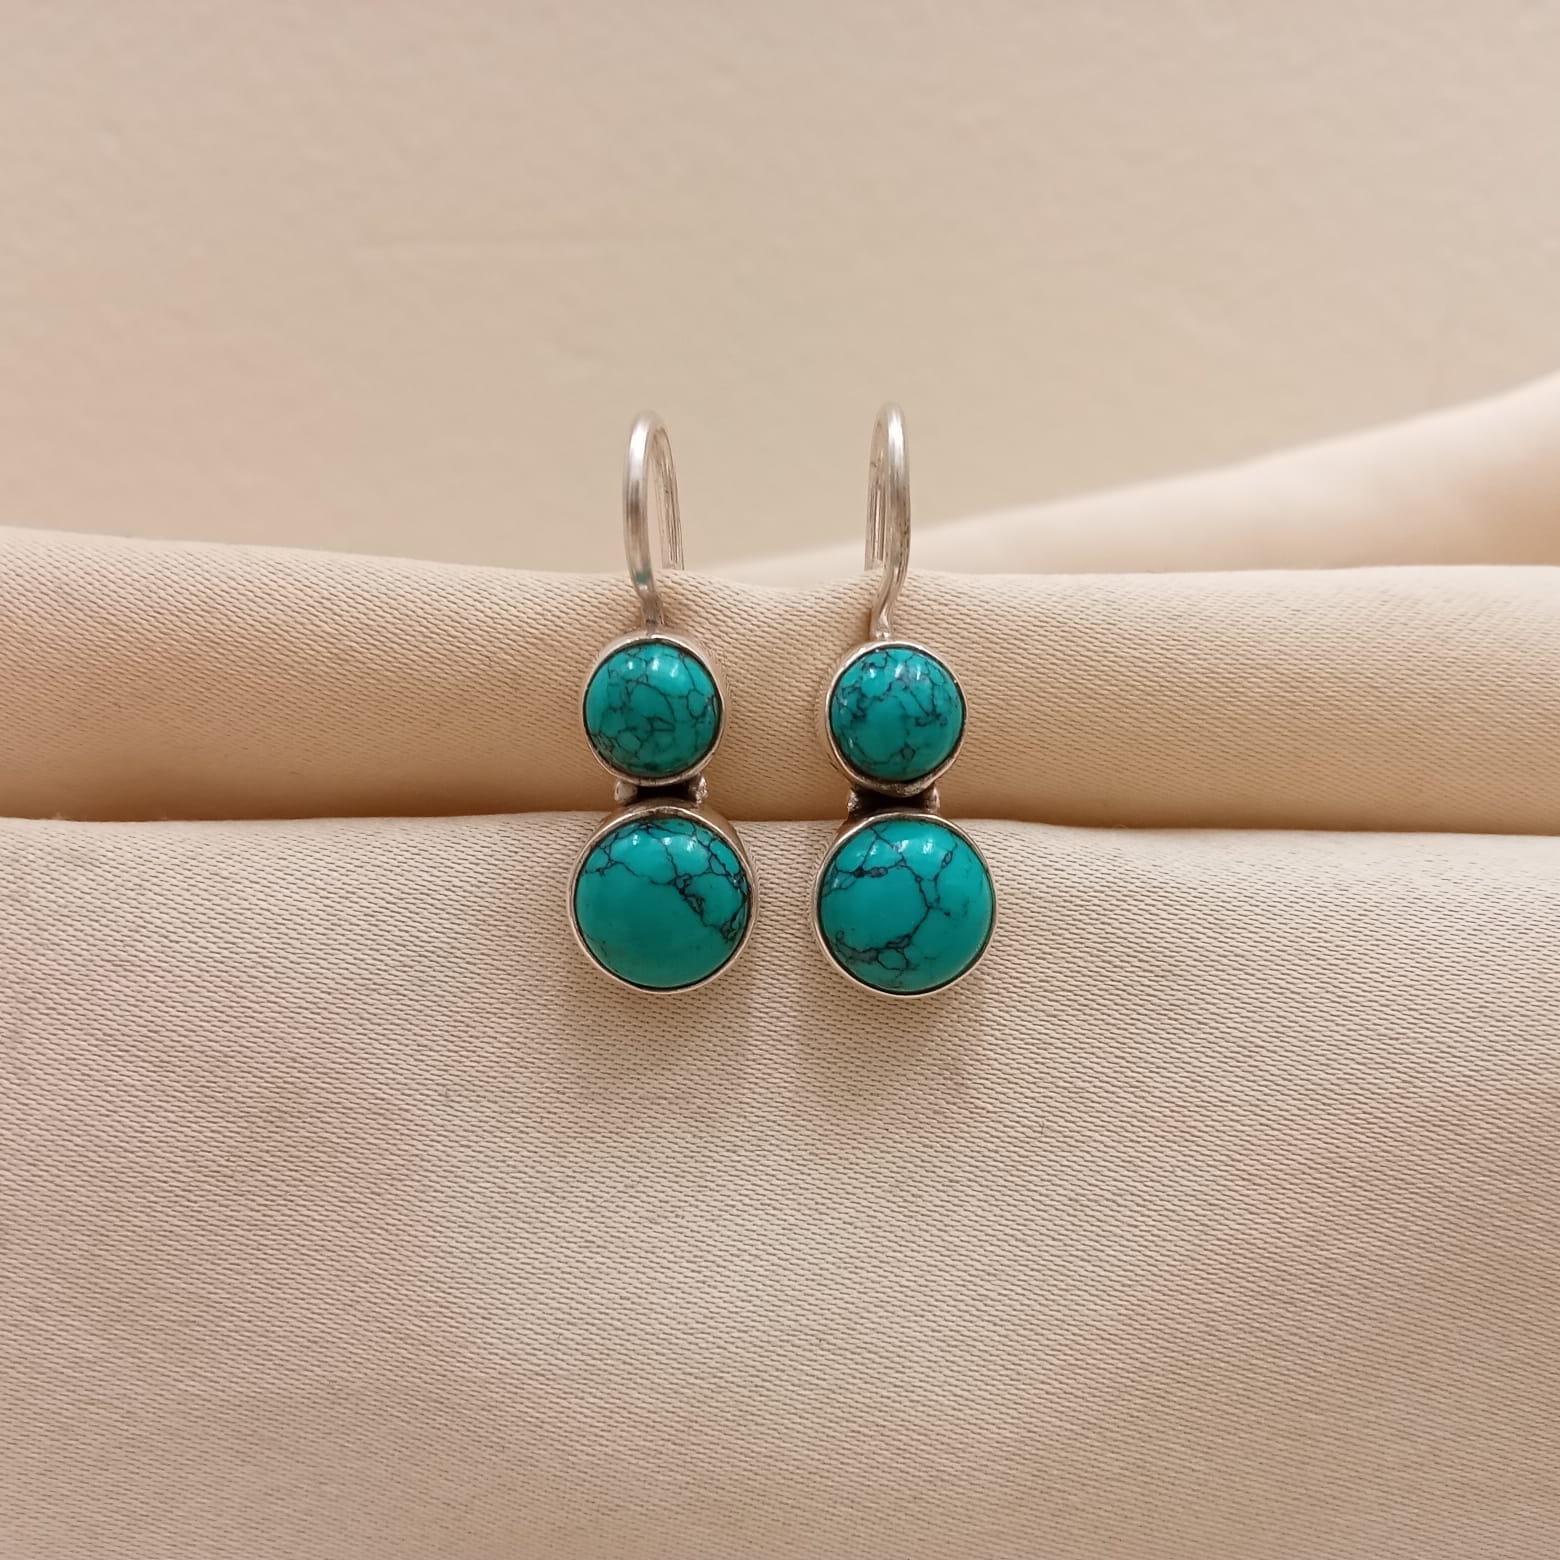 Cute Hydro Turquoise Earrings